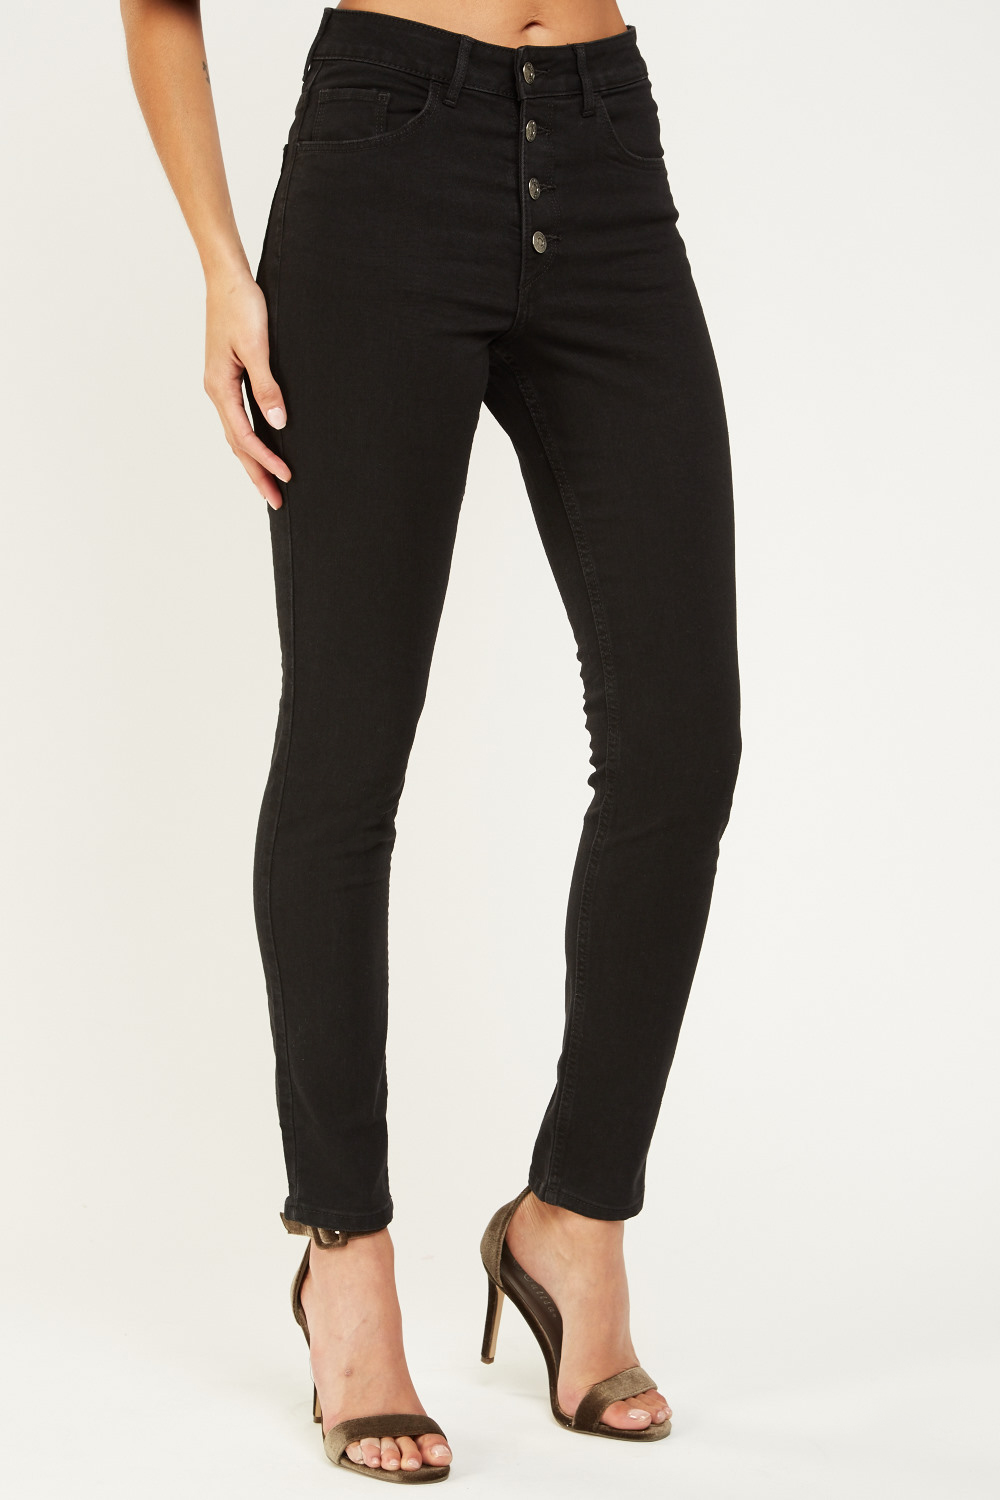 Skinny Ankle Grazer Jeans - Just $3